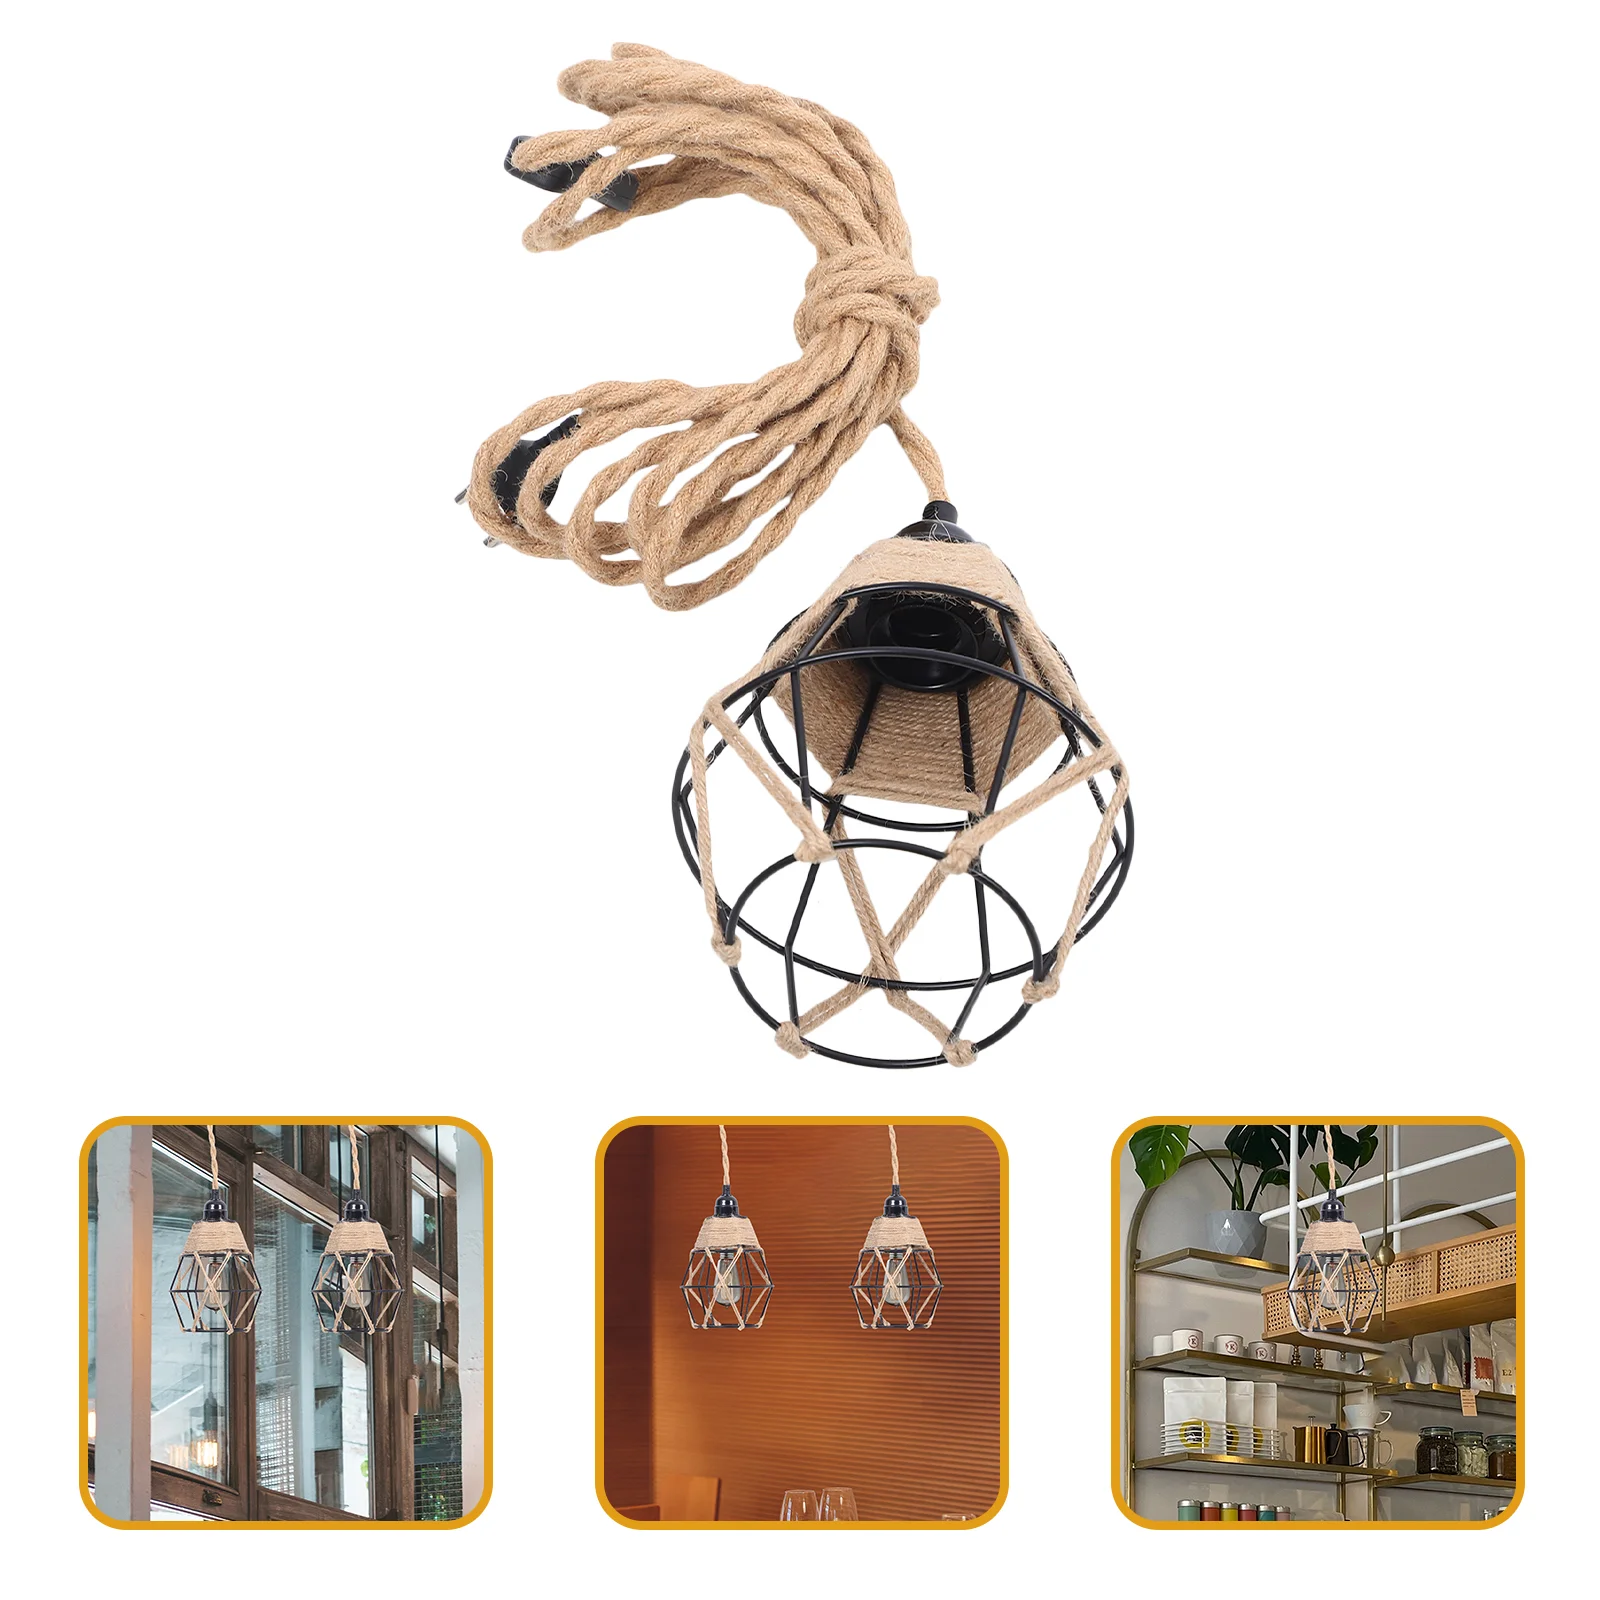 

Pendant Light Fixture Hanging Fixtures Ceiling Lamp Rope Accessory Living Room Outdoor Plug Lights Cord Chandeliers